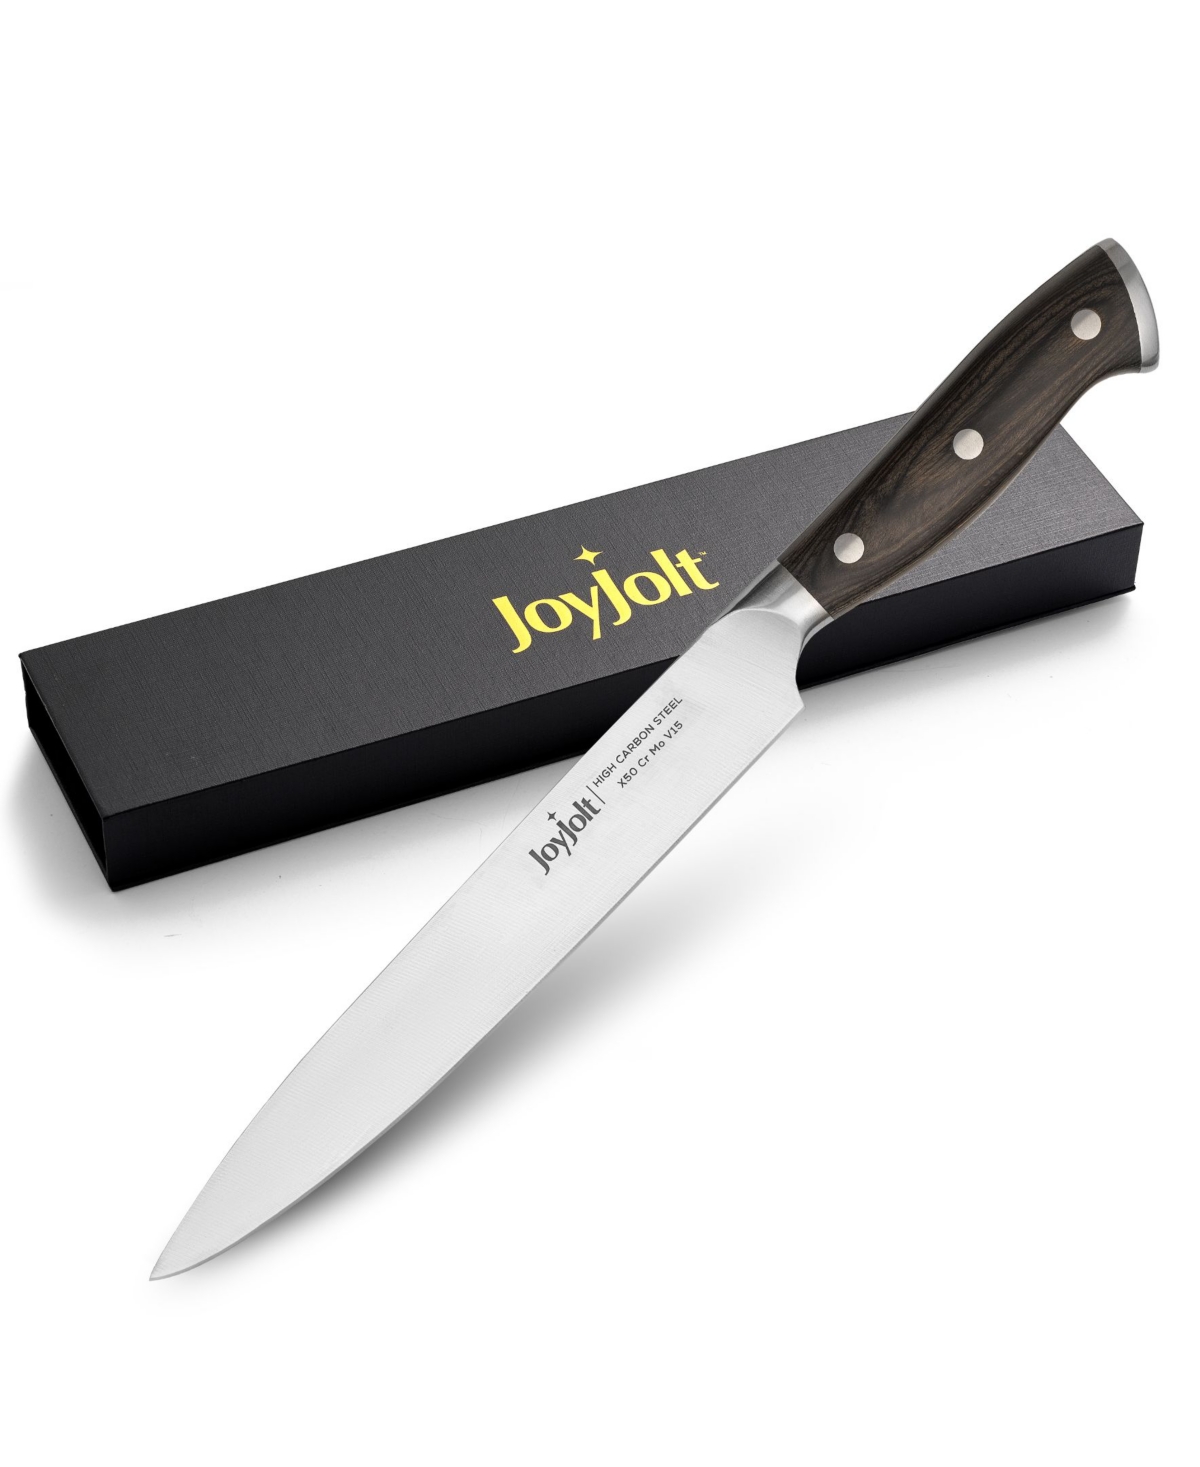 Joyjolt 8"  Slicing Knife High Carbon Steel Kitchen Knife In Gray